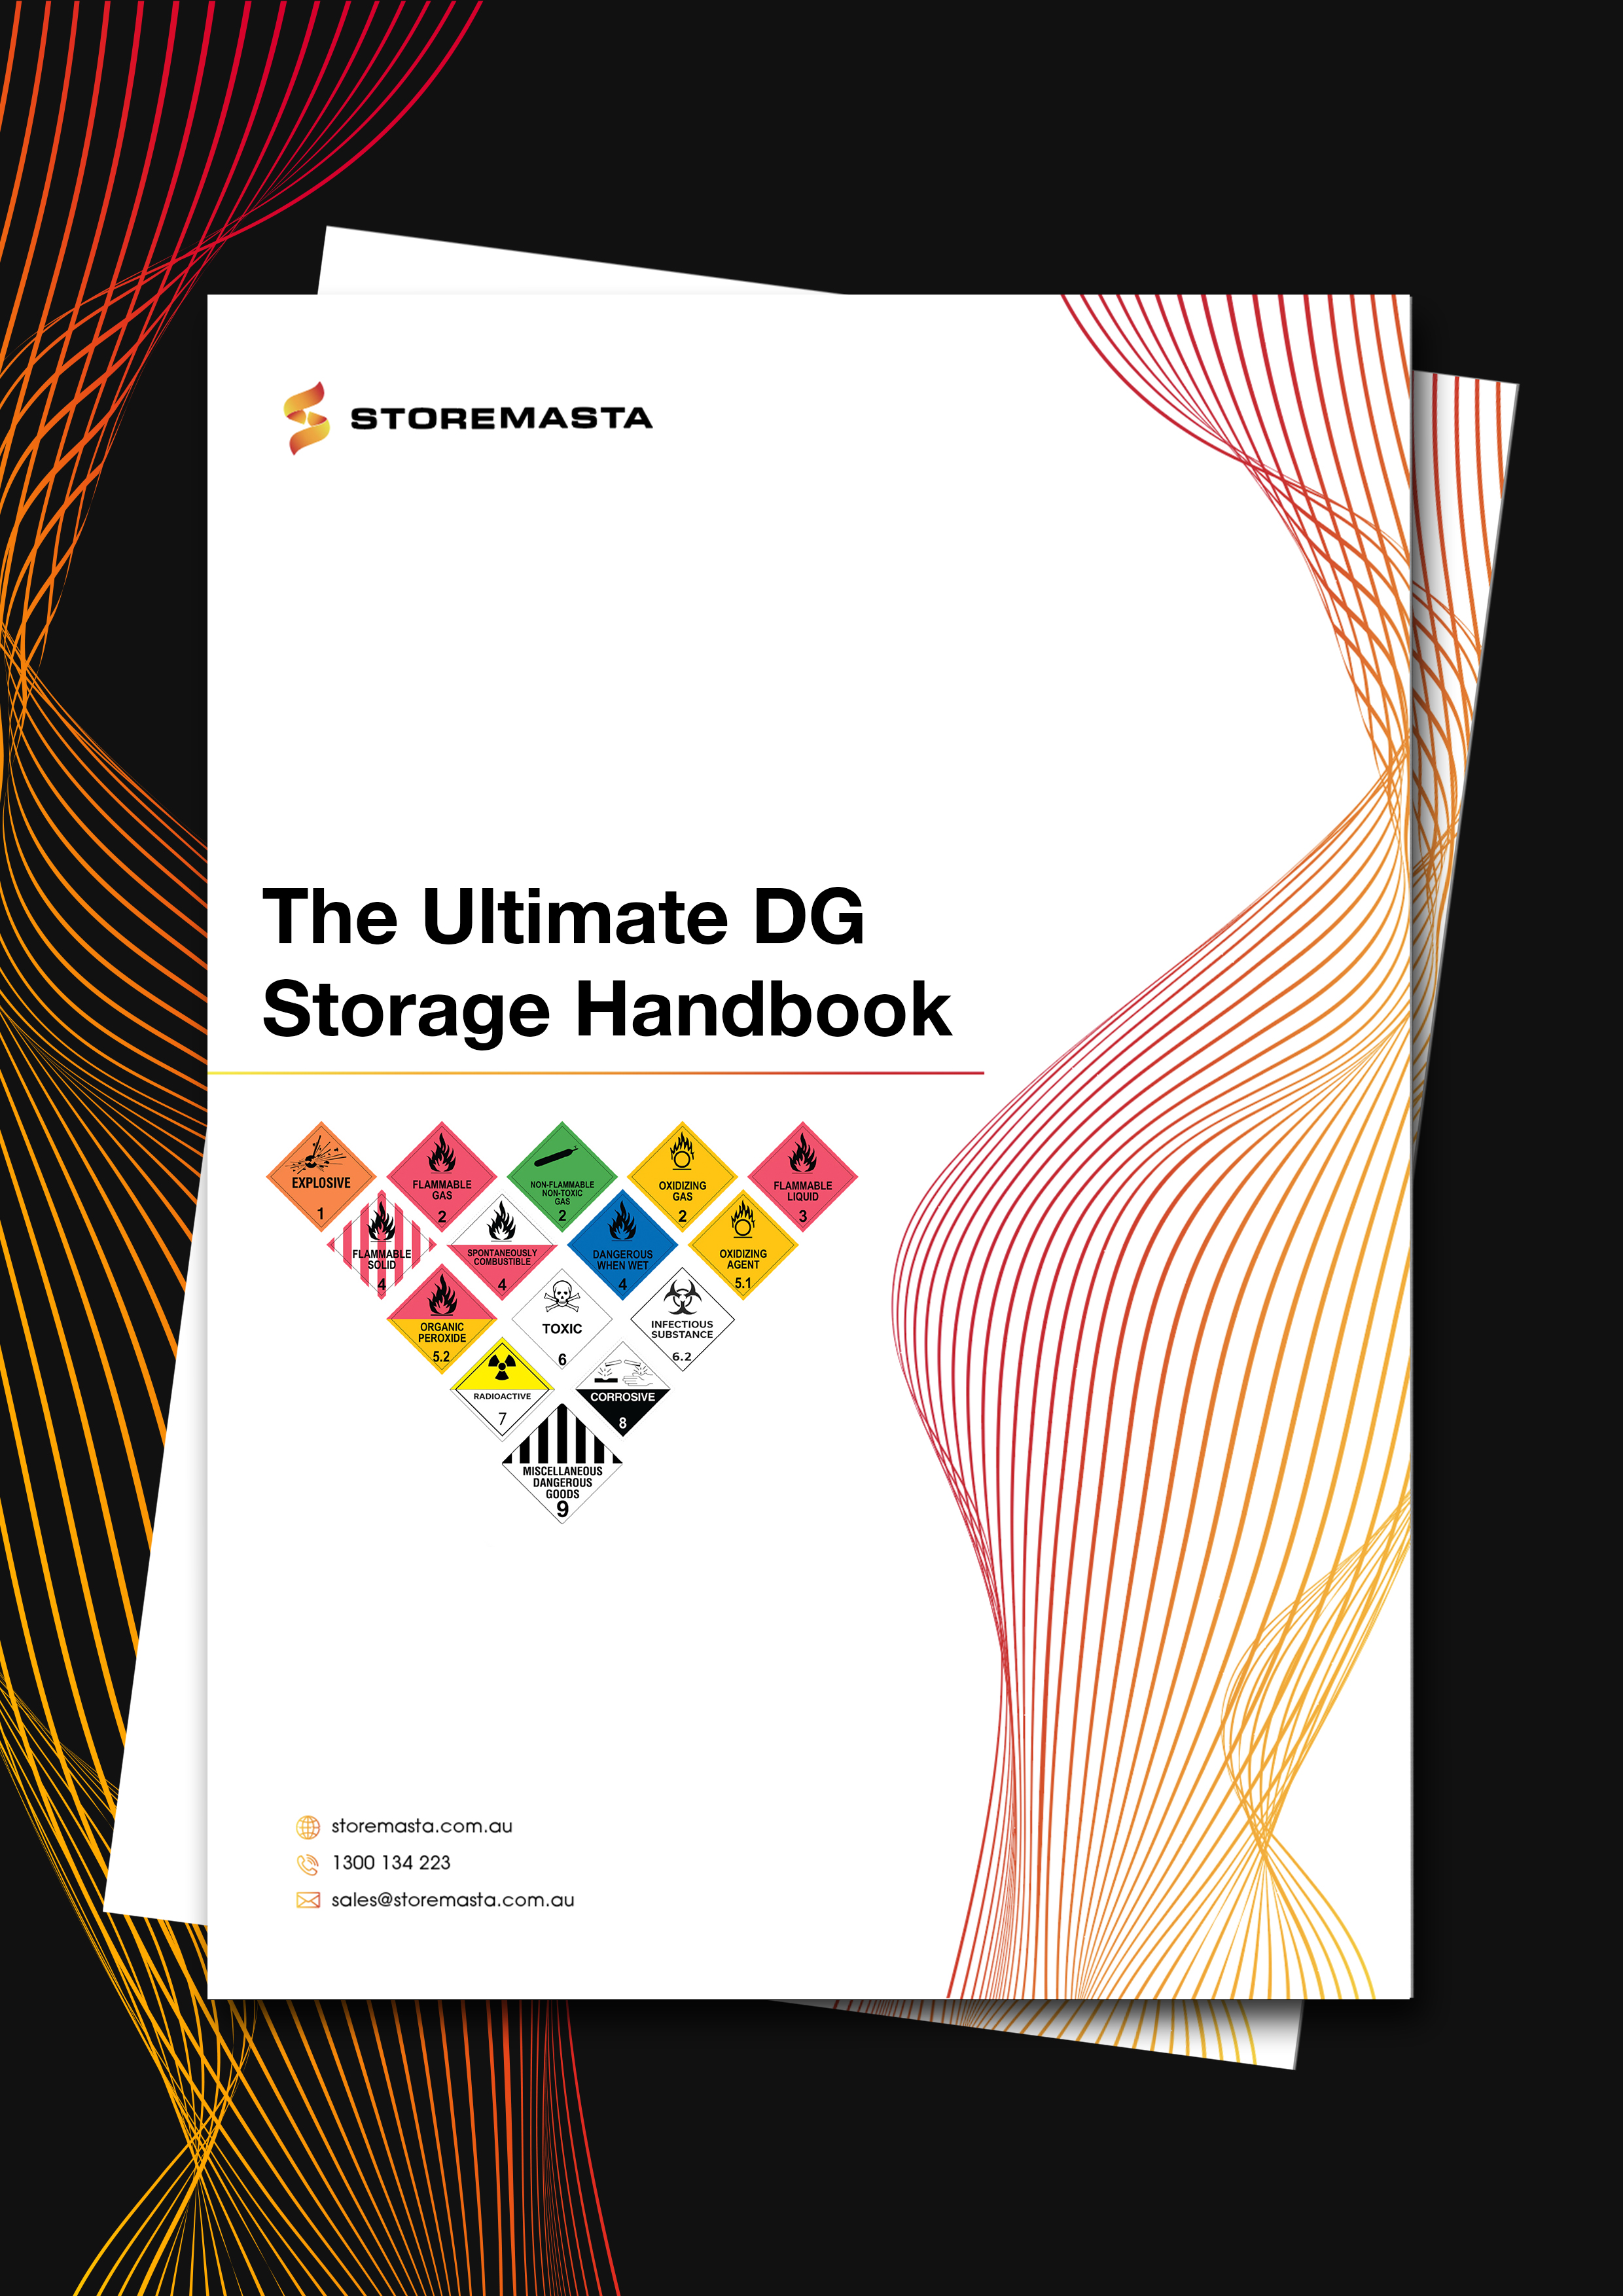 The ultimate DG storage handbook